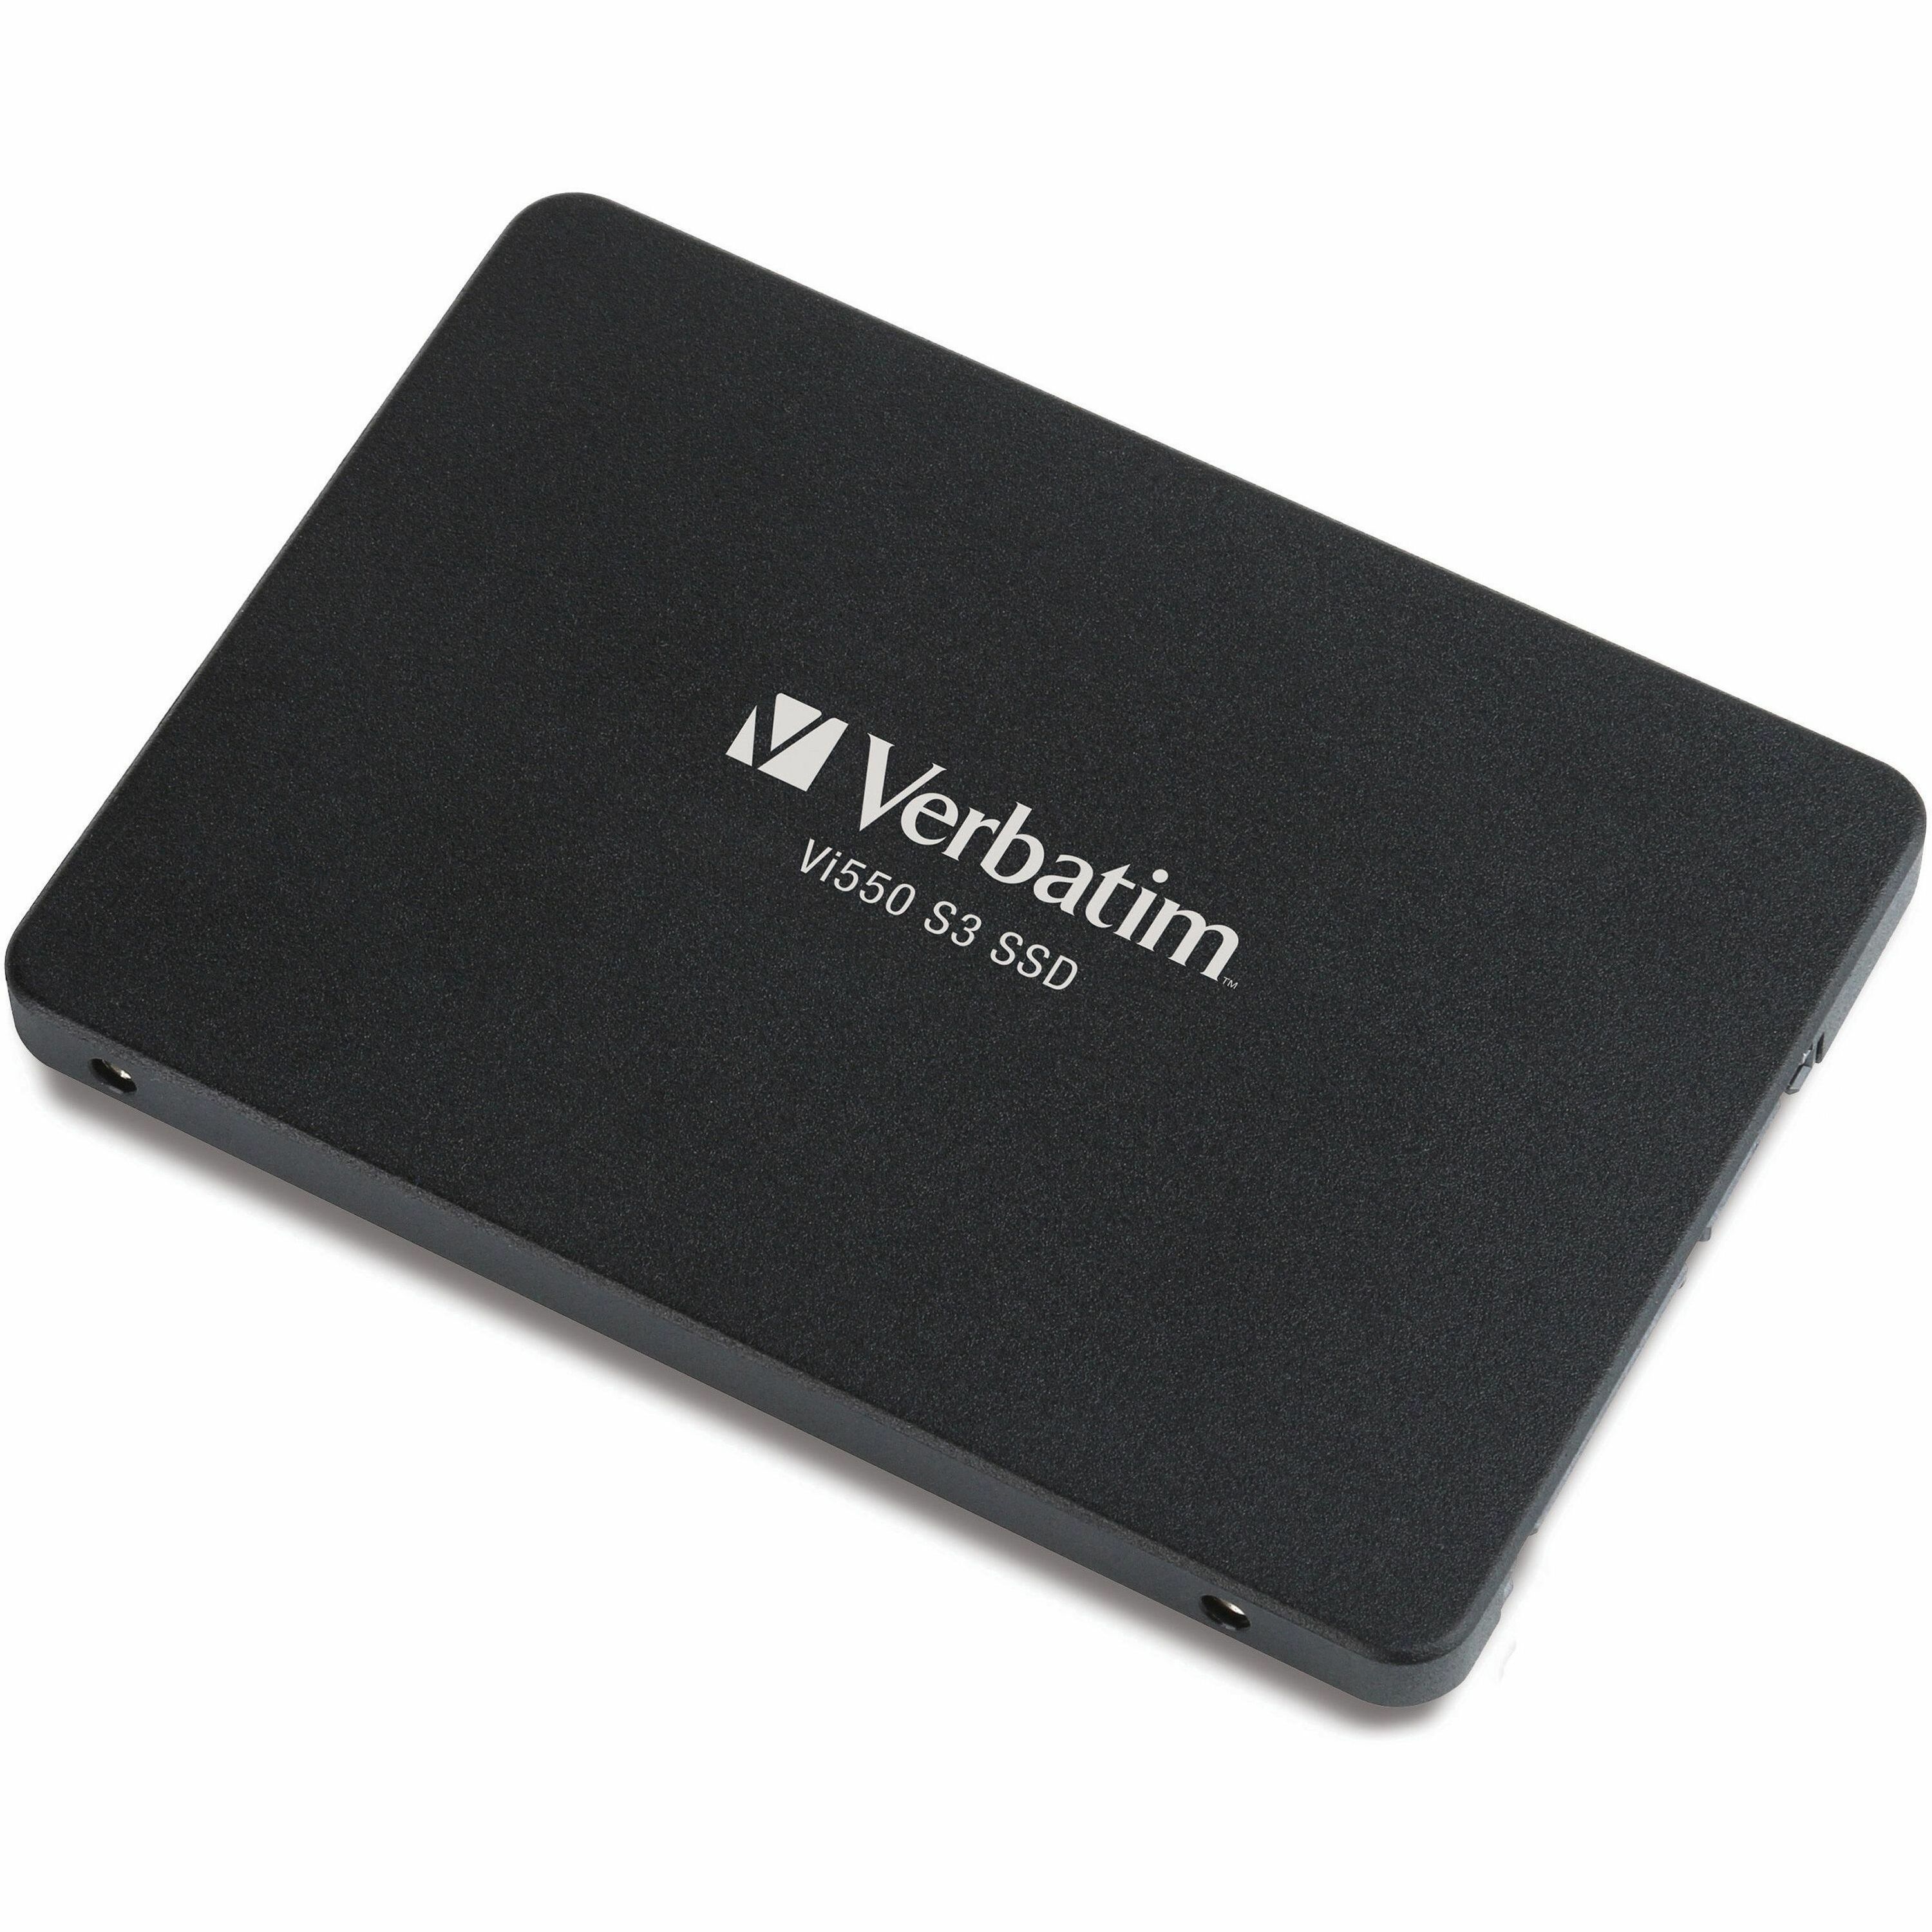 Settle Tilbageholde Analytisk Verbatim 256GB Vi550 SATA III 2.5" Internal SSD - 560 MB/s Maximum Read  Transfer Rate - 3 Year Warranty - Office Supply Hut